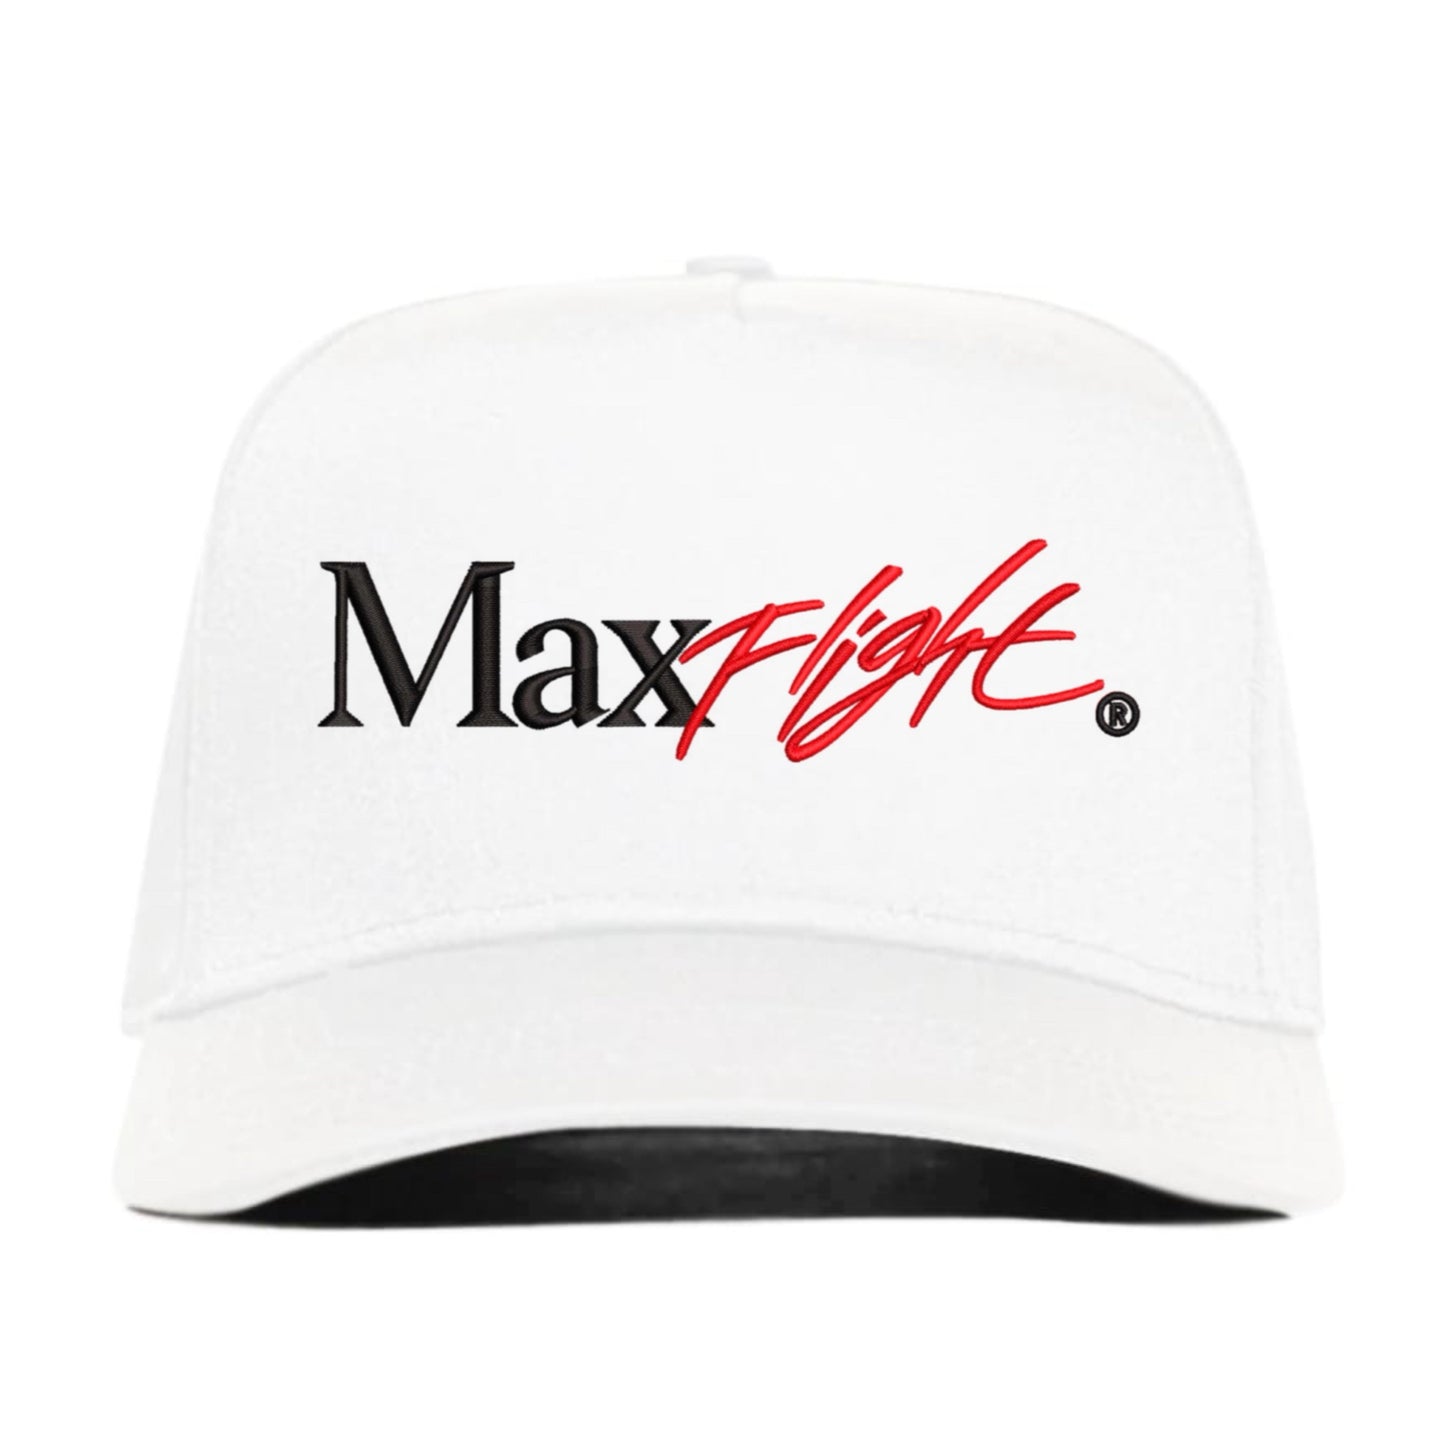 VINTAGE MAX FLIGHT SNAPBACK HAT -  WHITE/BLACK/SPORT RED